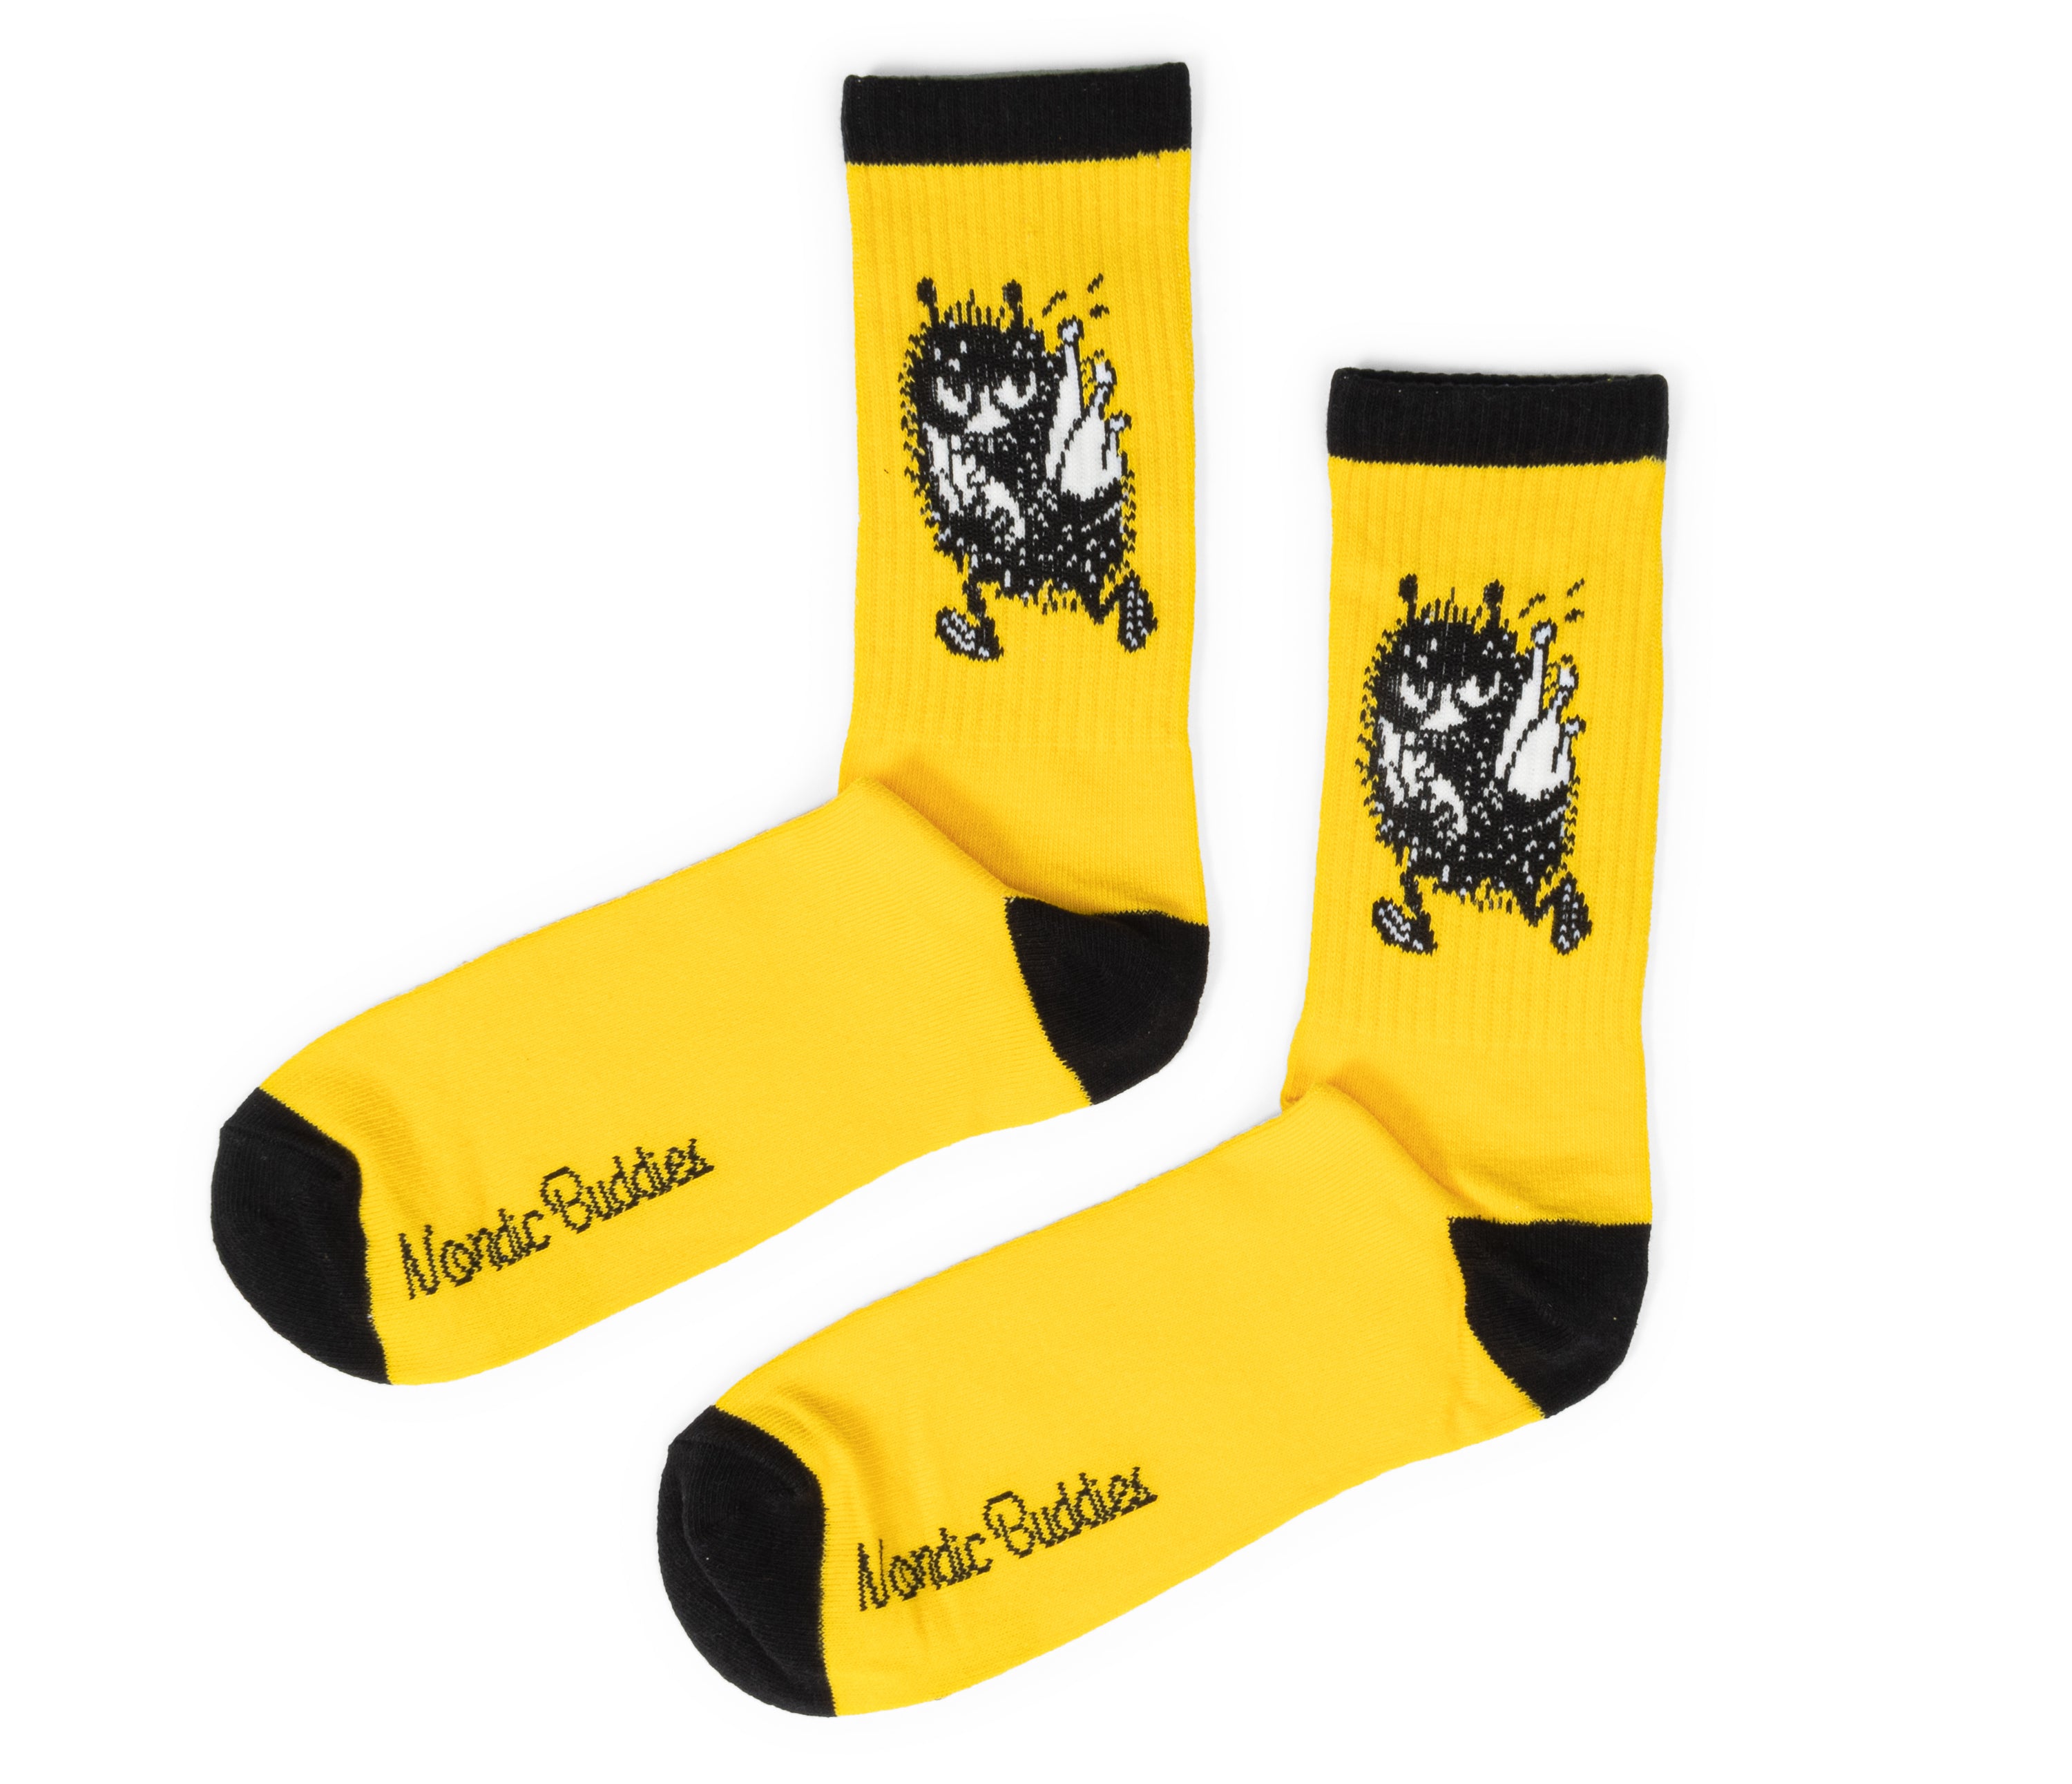 Stinky's Getaway Retro Men Socks - Yellow